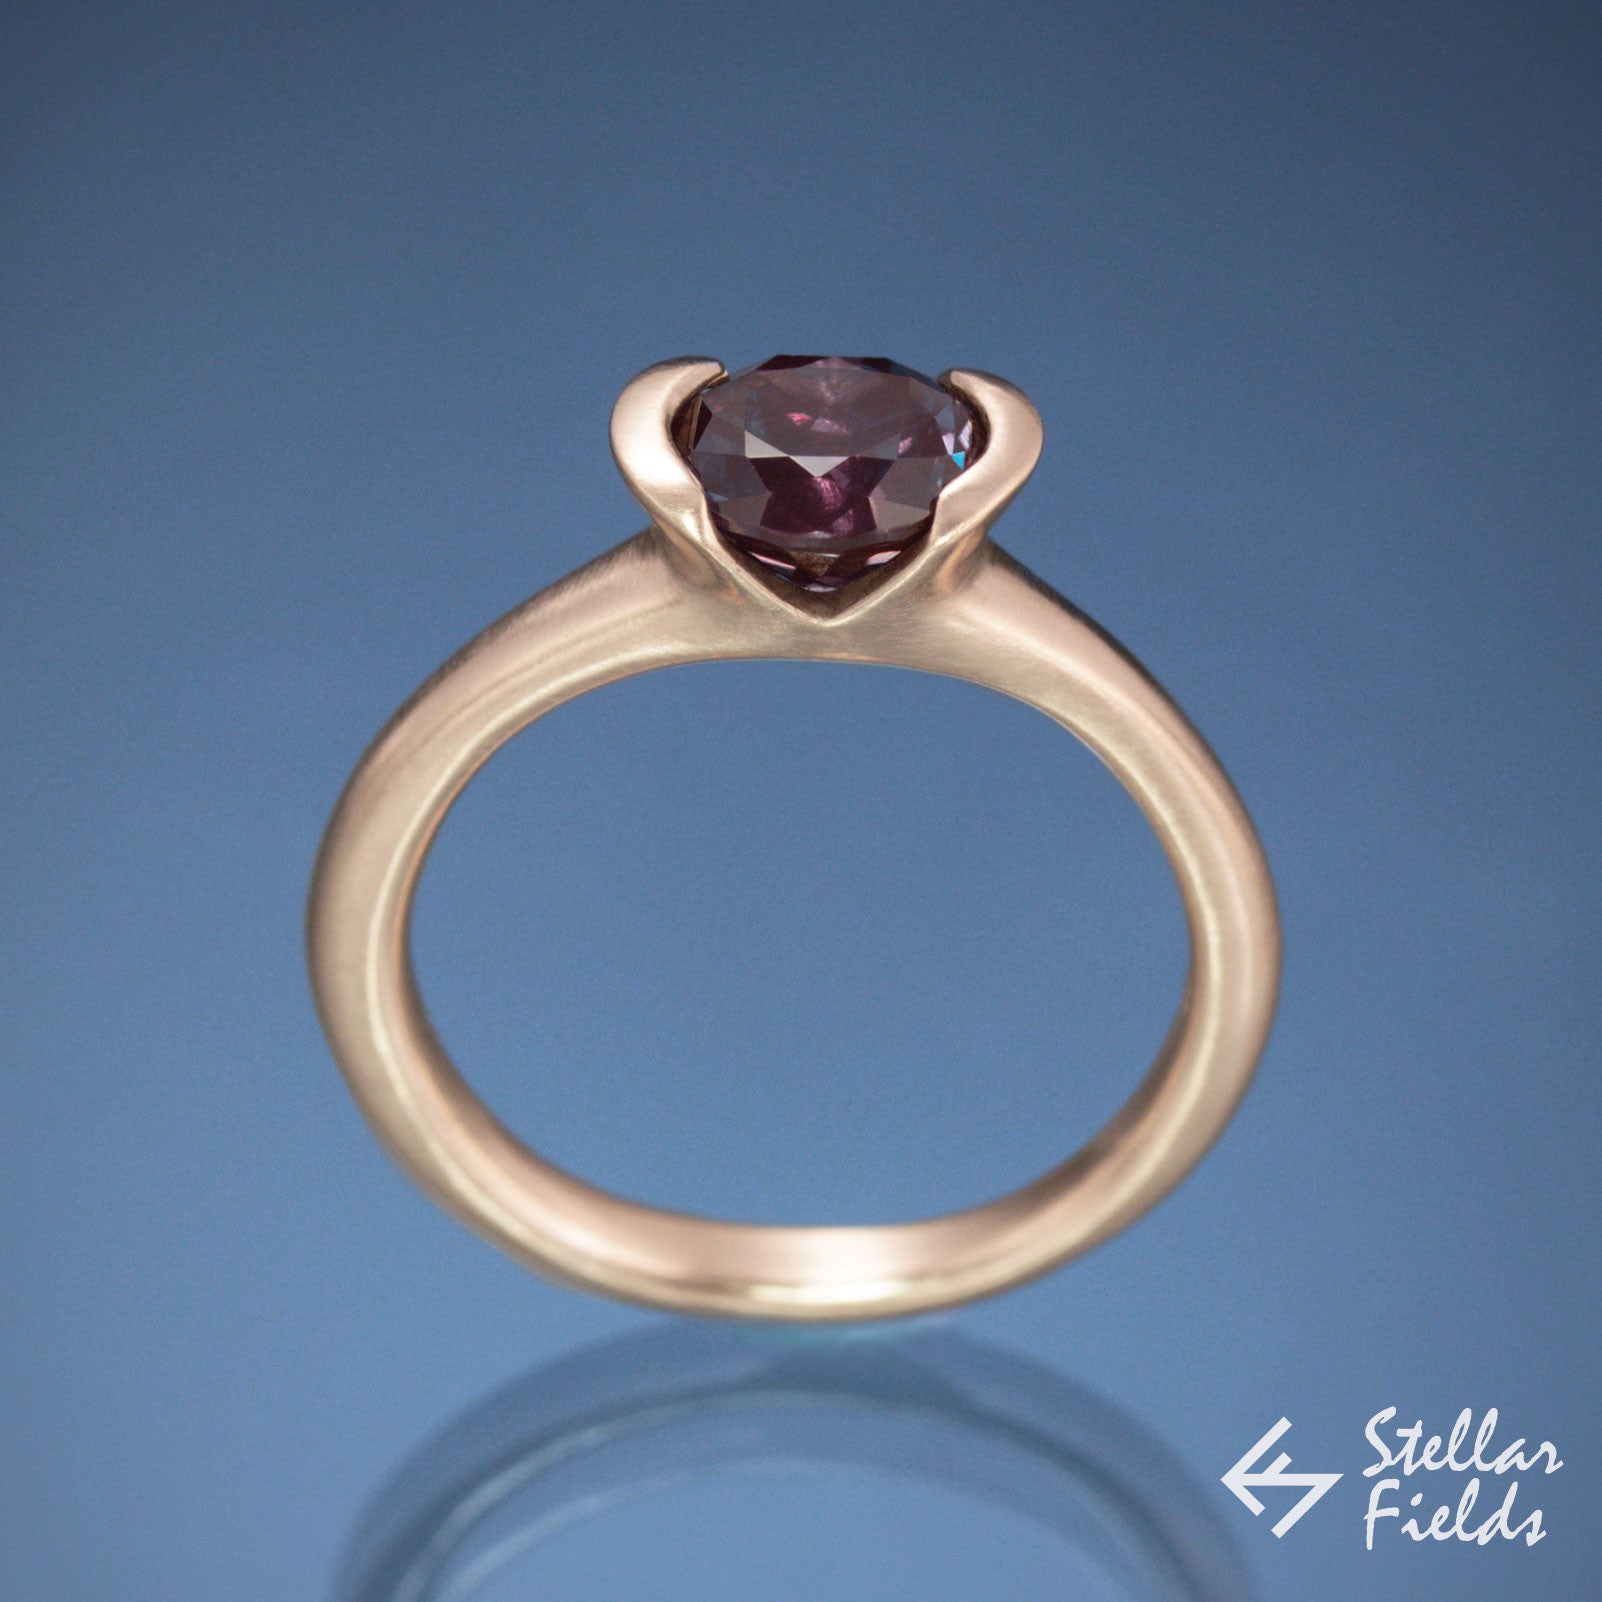 Minimal Ring in Polished Rose Gold